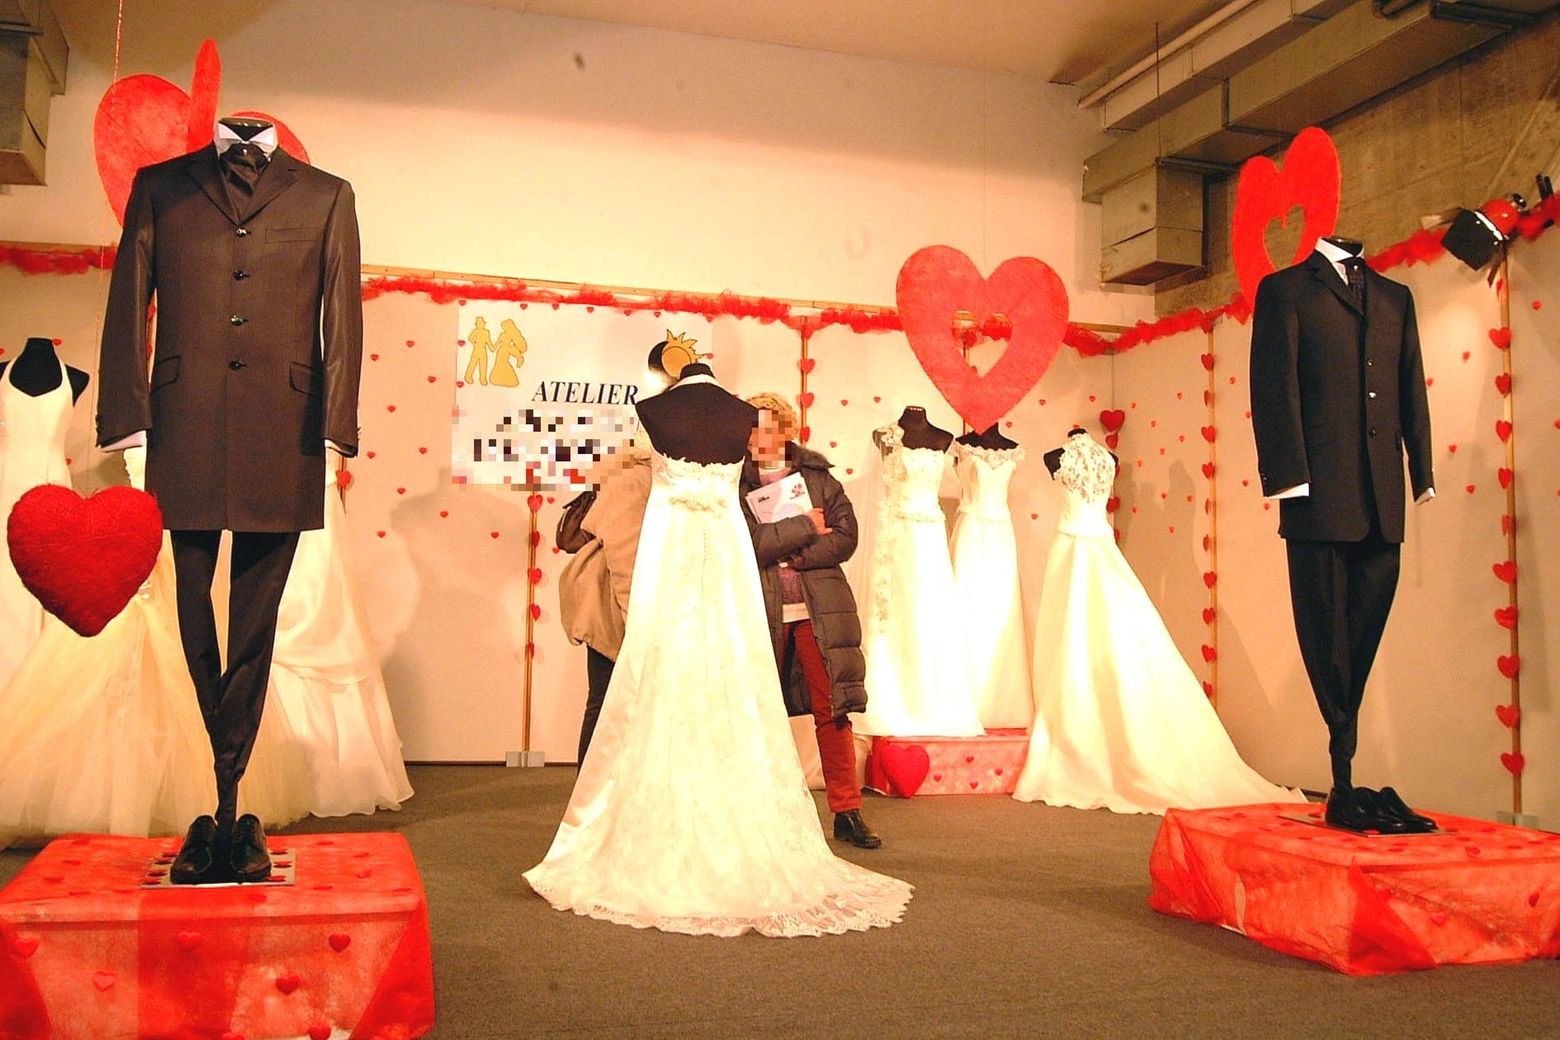 Un atelier di abiti da sposa (Foto Newpress)